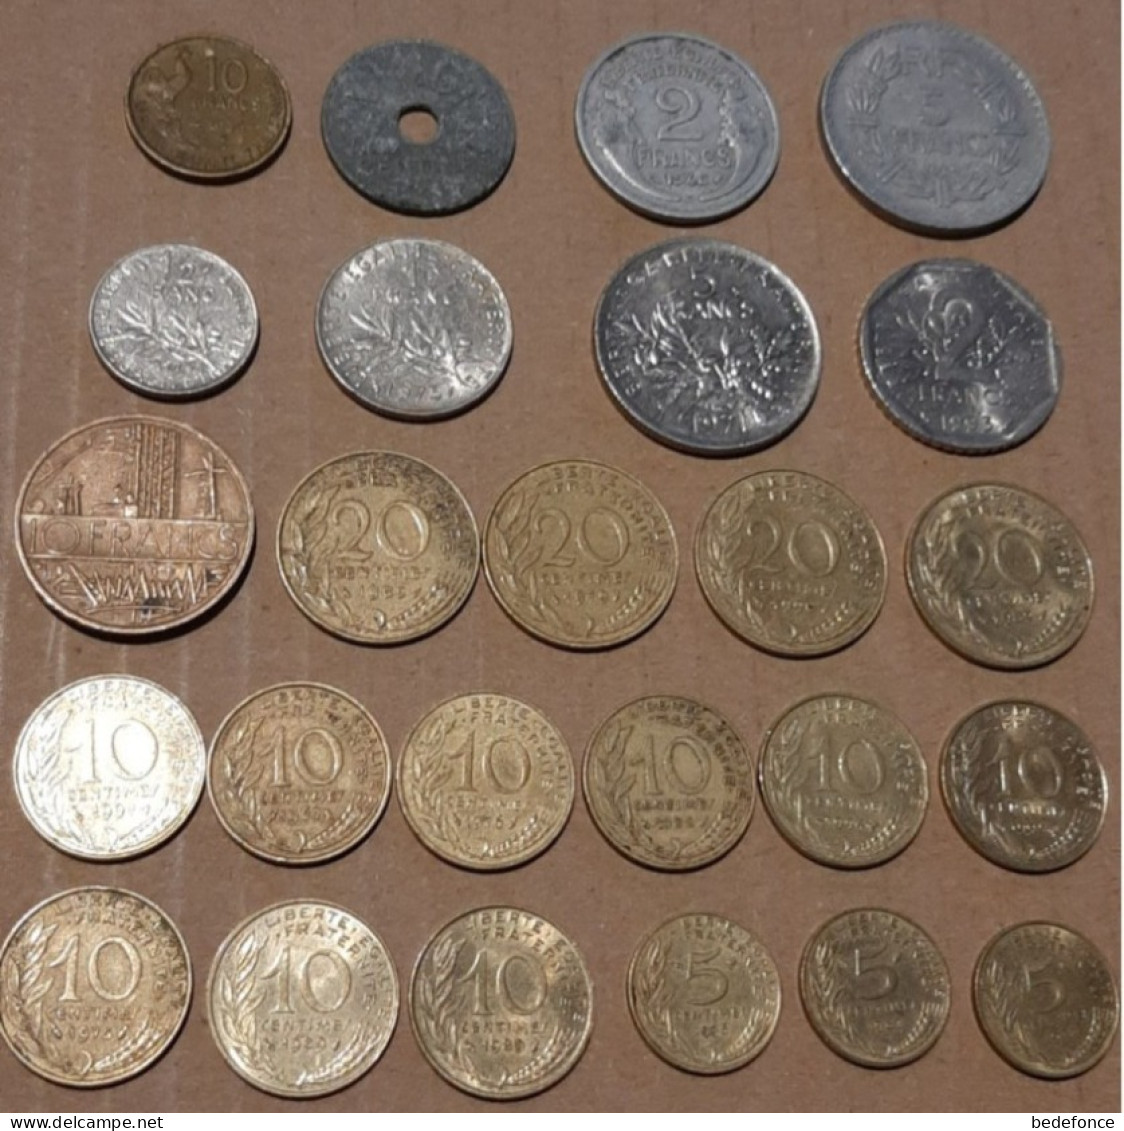 Monnaie - France - Lot De Monnaies Années 1946 à 1997 - Sammlungen